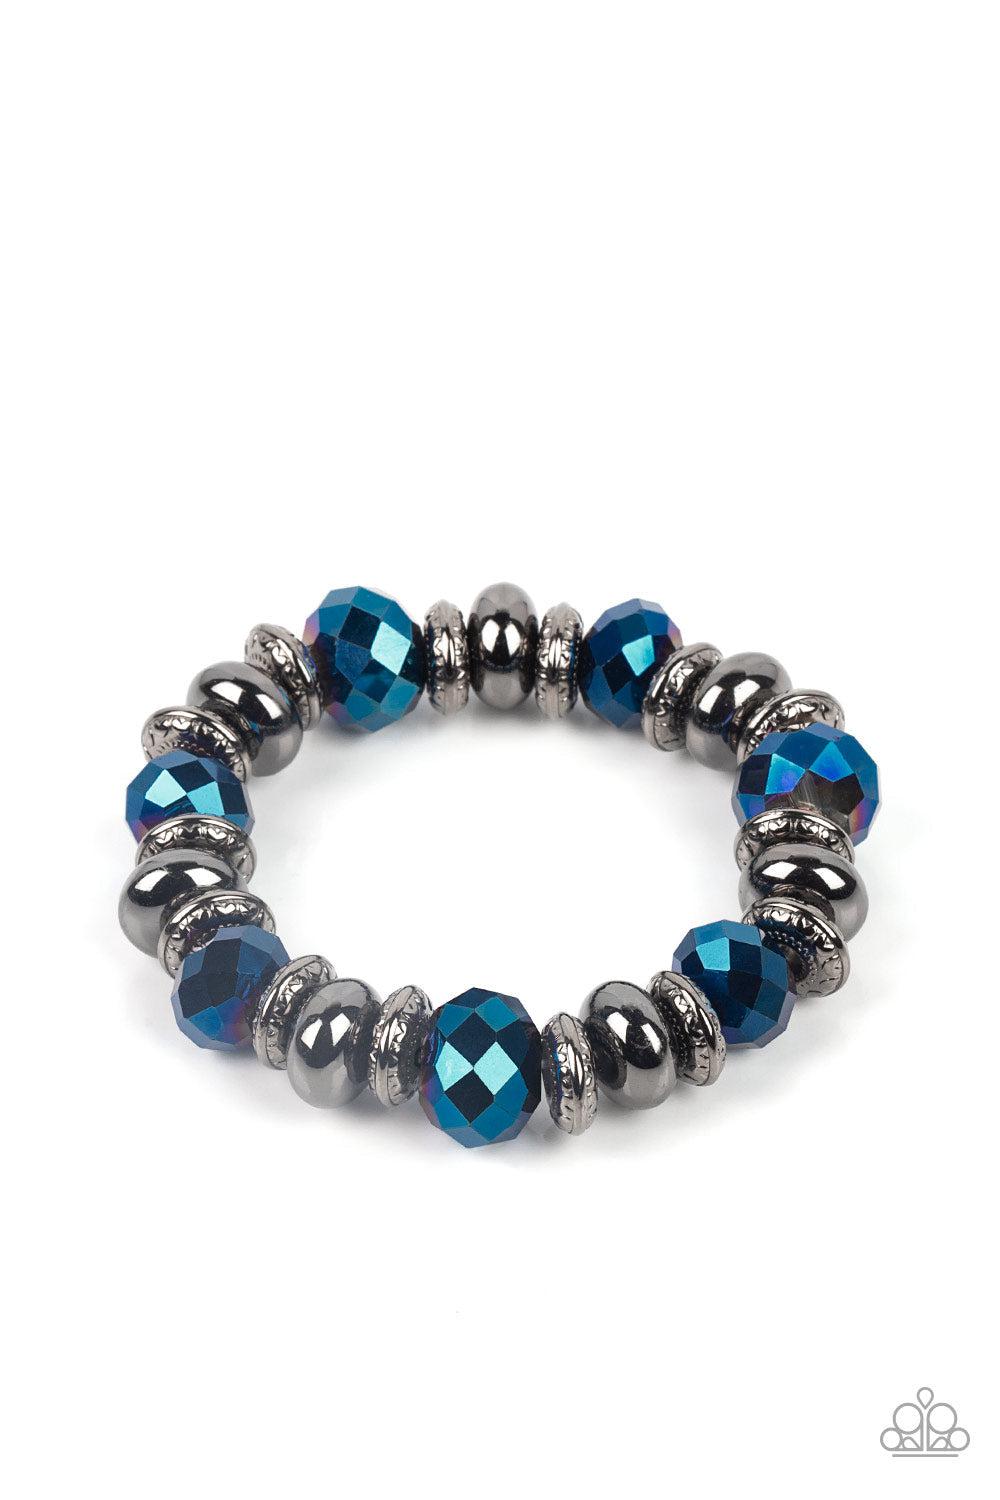 Power Pose Blue Bracelet - Paparazzi Accessories- lightbox - CarasShop.com - $5 Jewelry by Cara Jewels